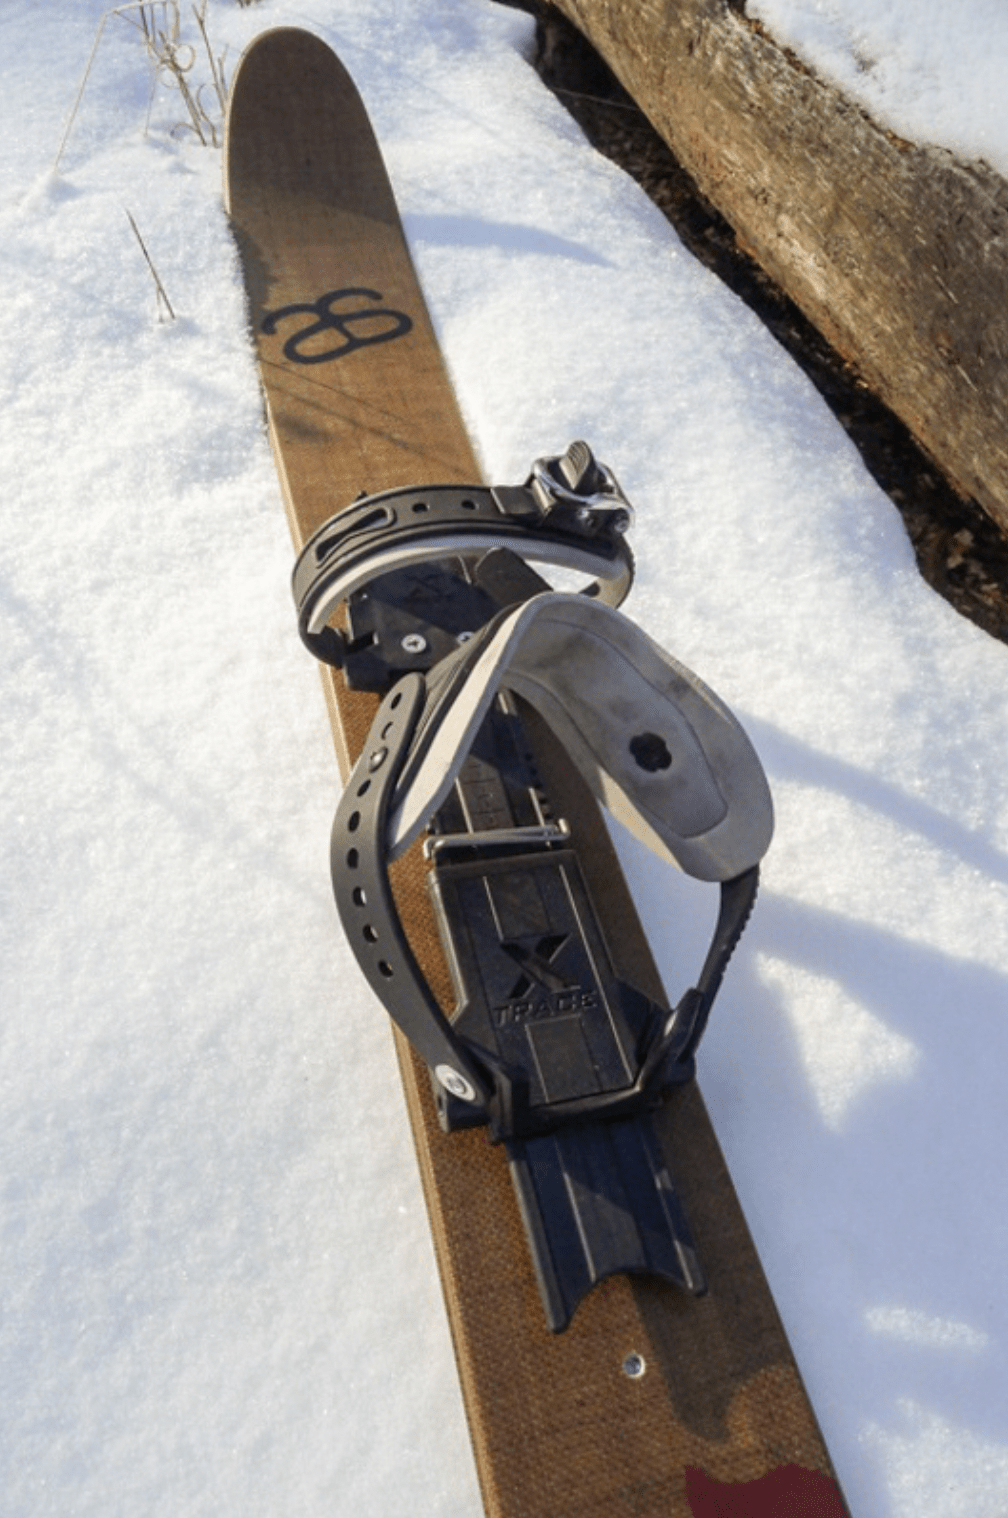 Hok Ski 145cm With Universal Pivot Binding